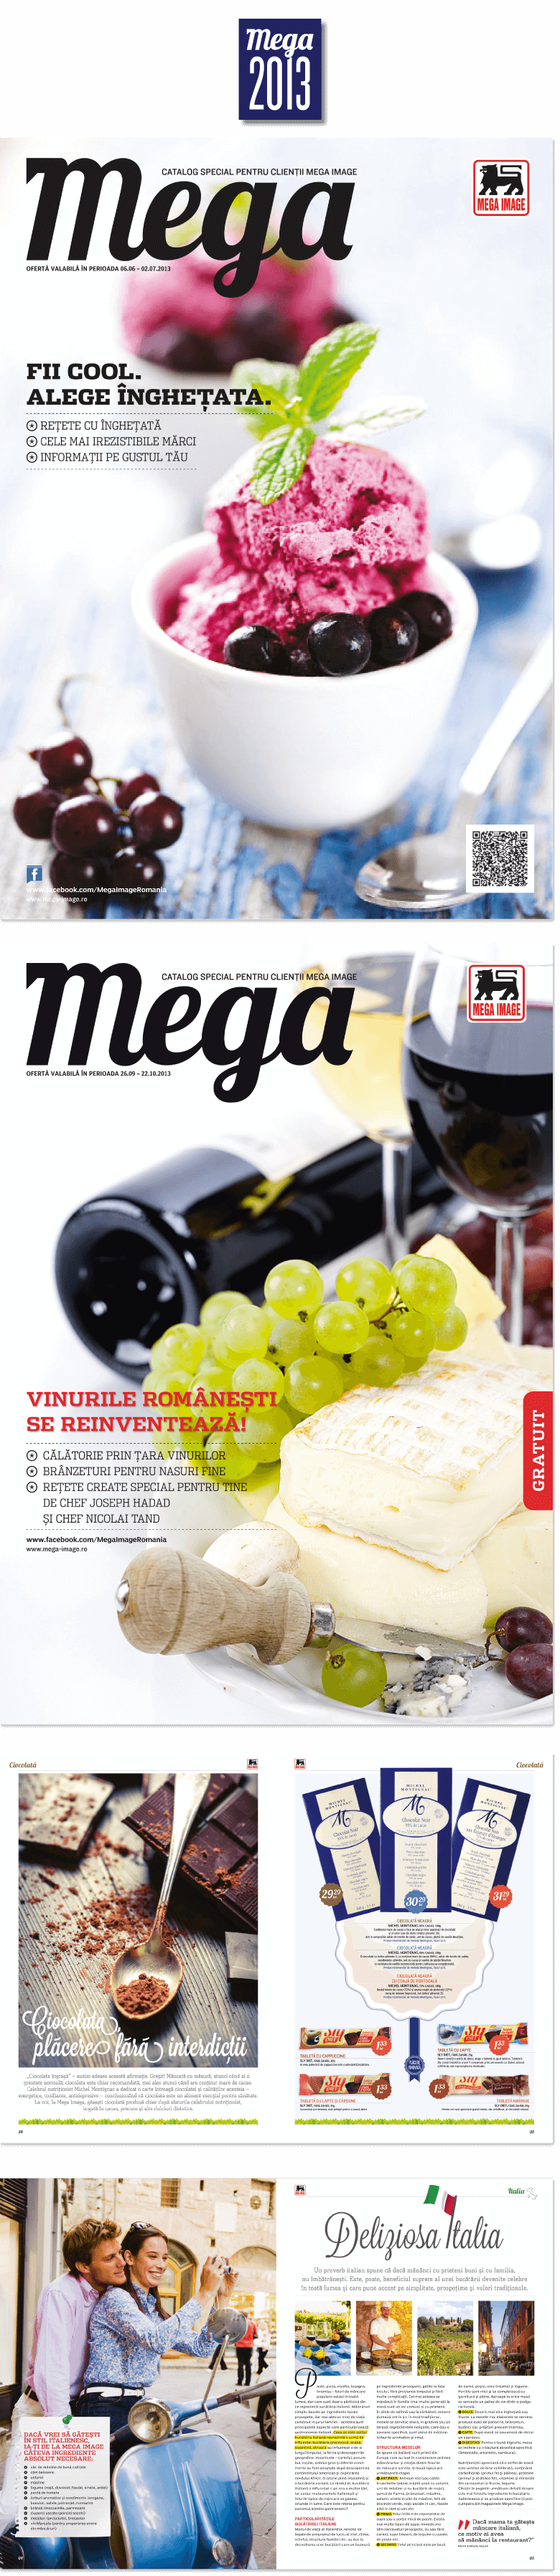  Mega customer magazine with a fresh design in 2013